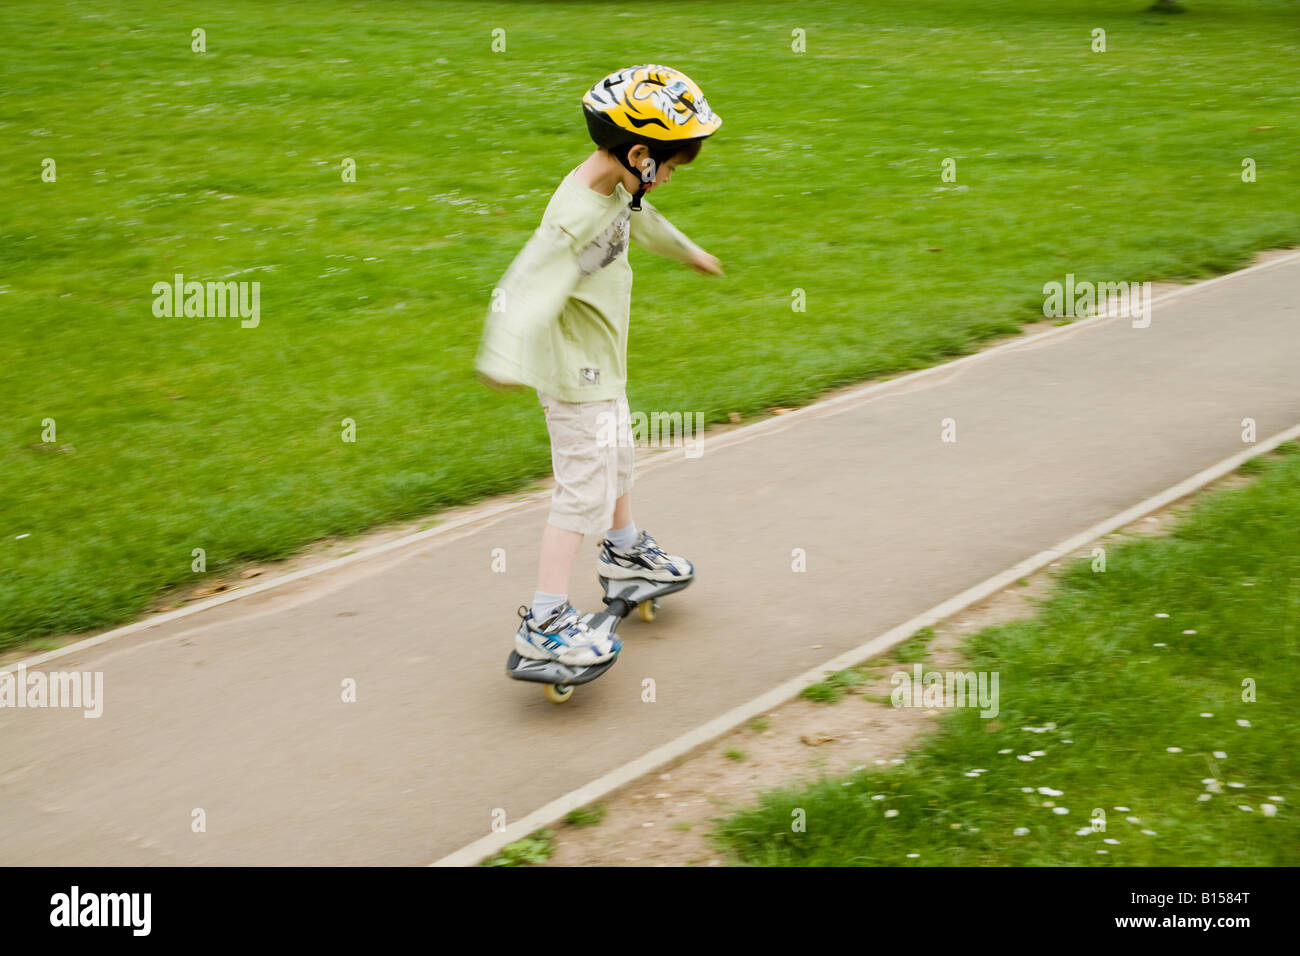 People Summer bike bmx children marlow park playing skate boarding Stock Photo